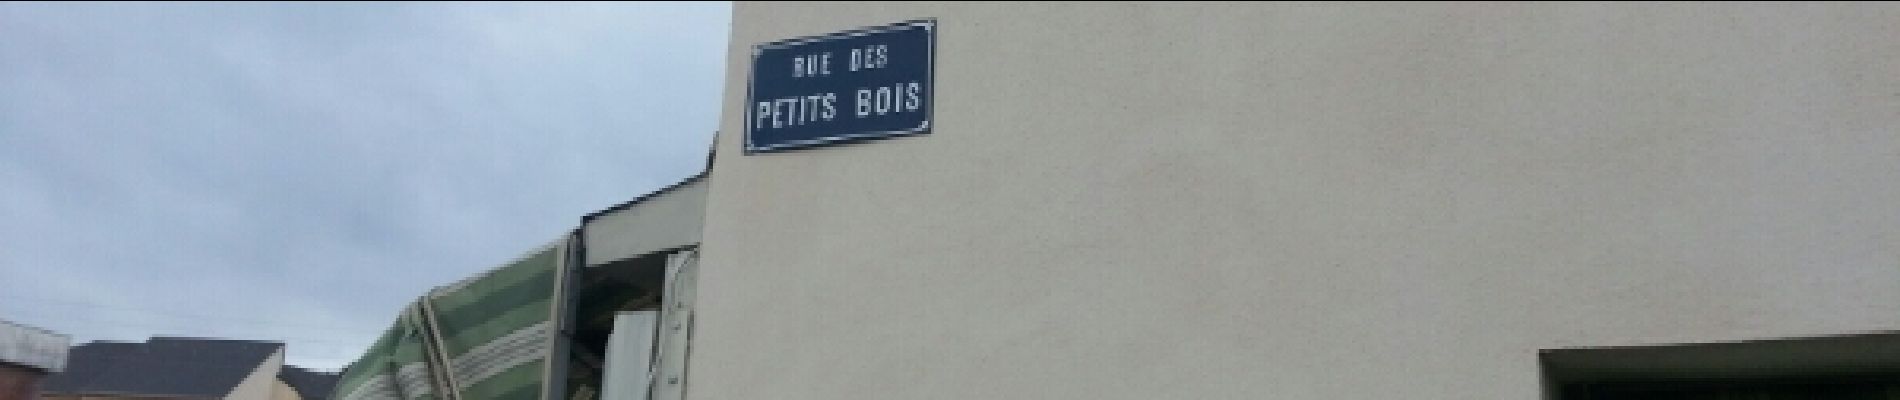 POI Bolbec - Rue des Petits Bois - Photo